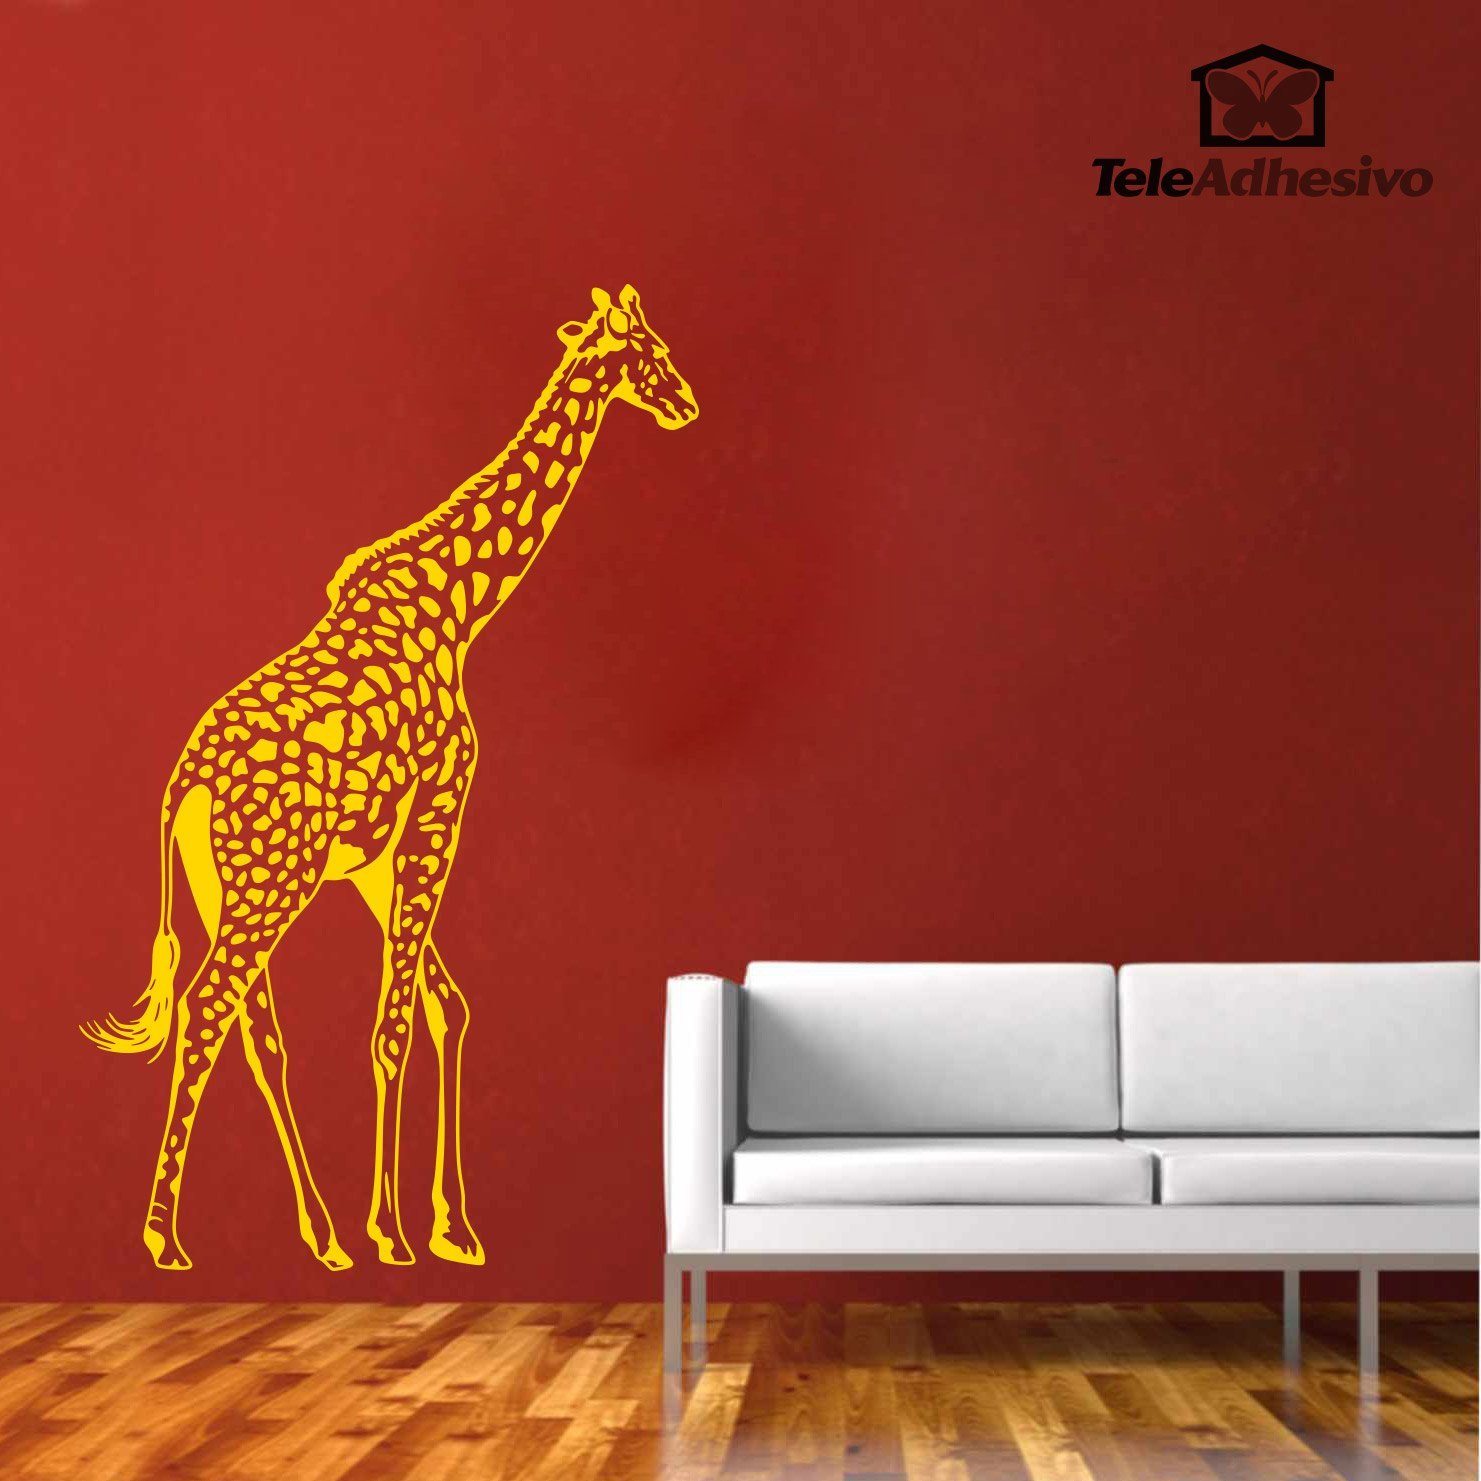 Wandtattoos: Giraffe in voller Länge